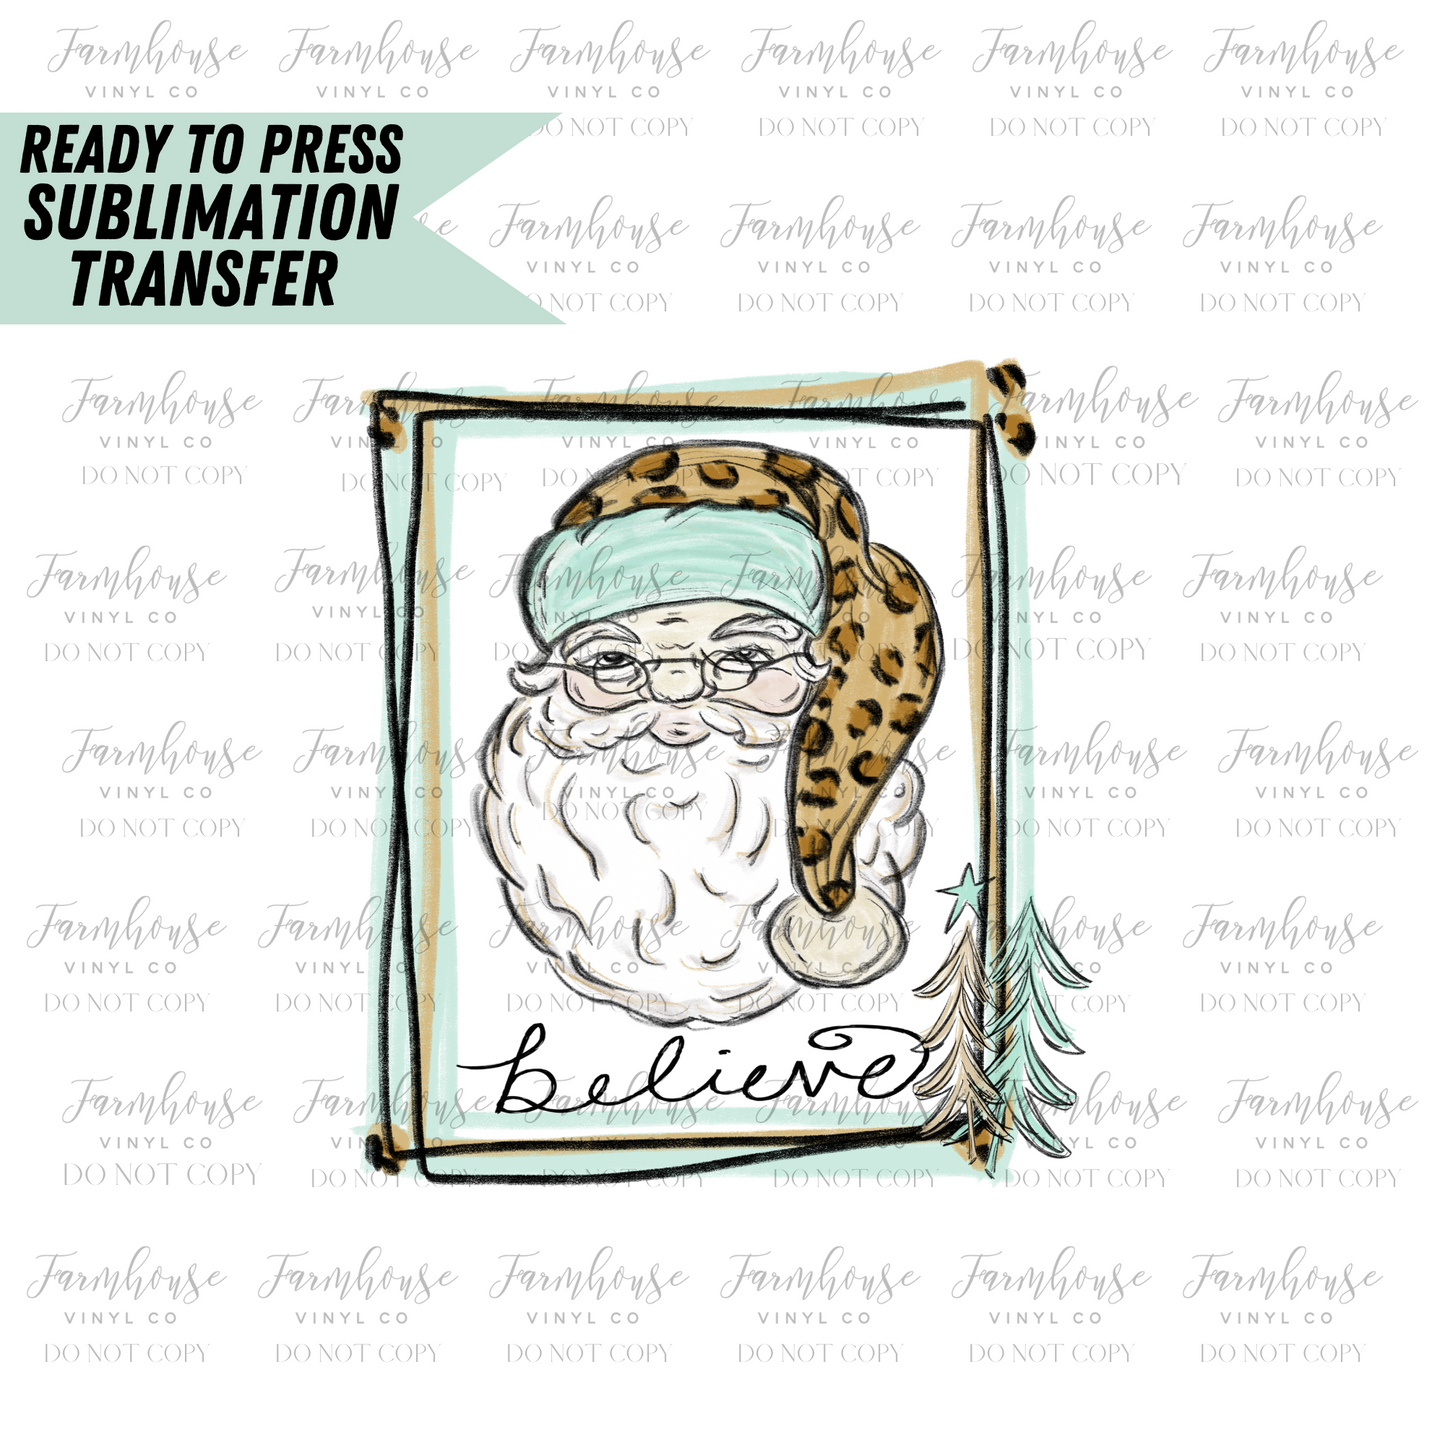 Leopard Santa Claus Believe Ready To Press Sublimation Transfer - Farmhouse Vinyl Co